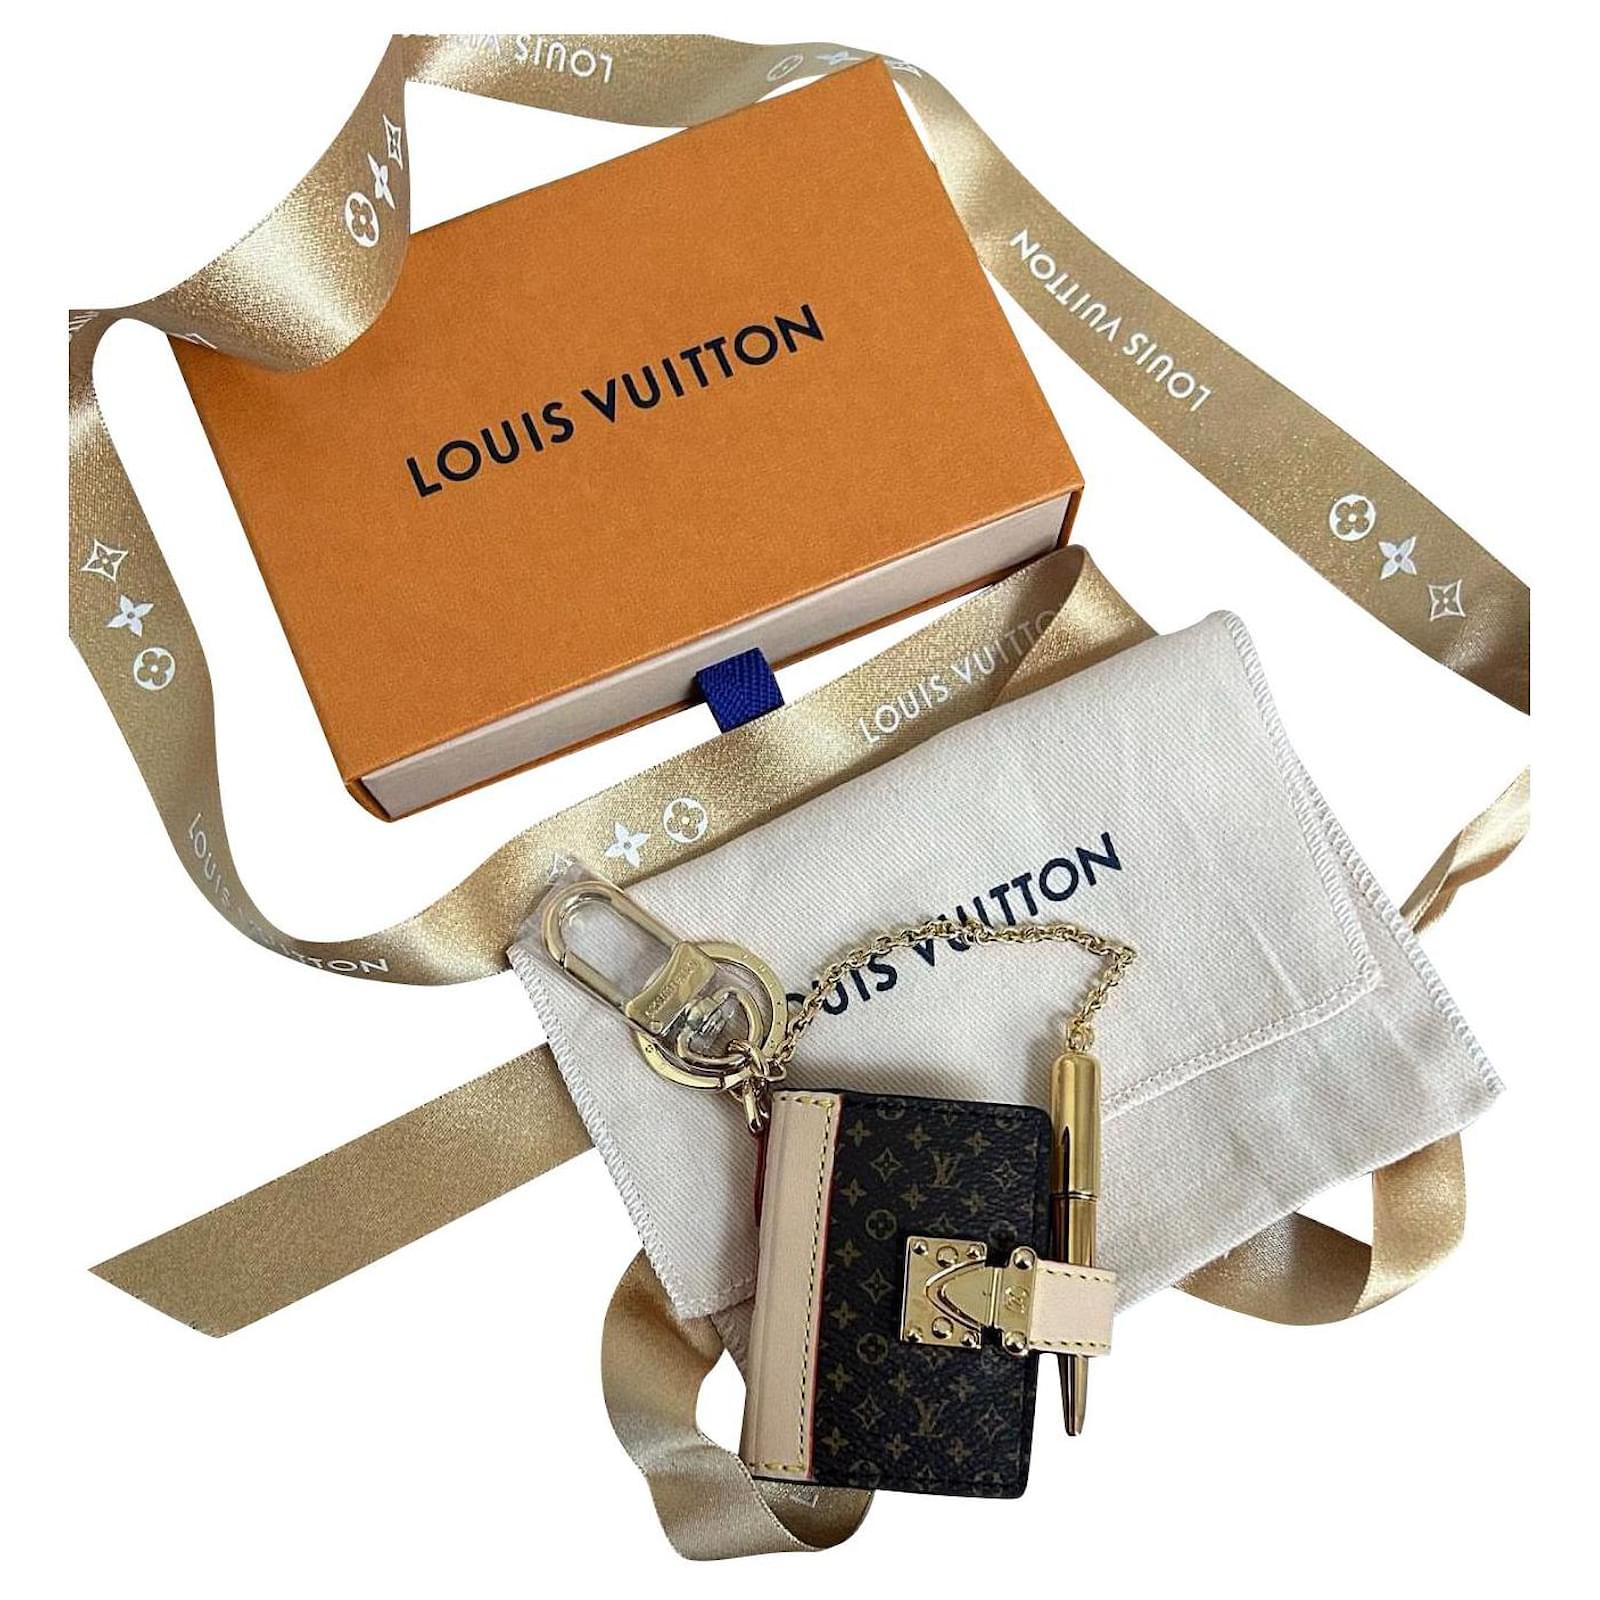 Louis Vuitton Bag Charm Collection